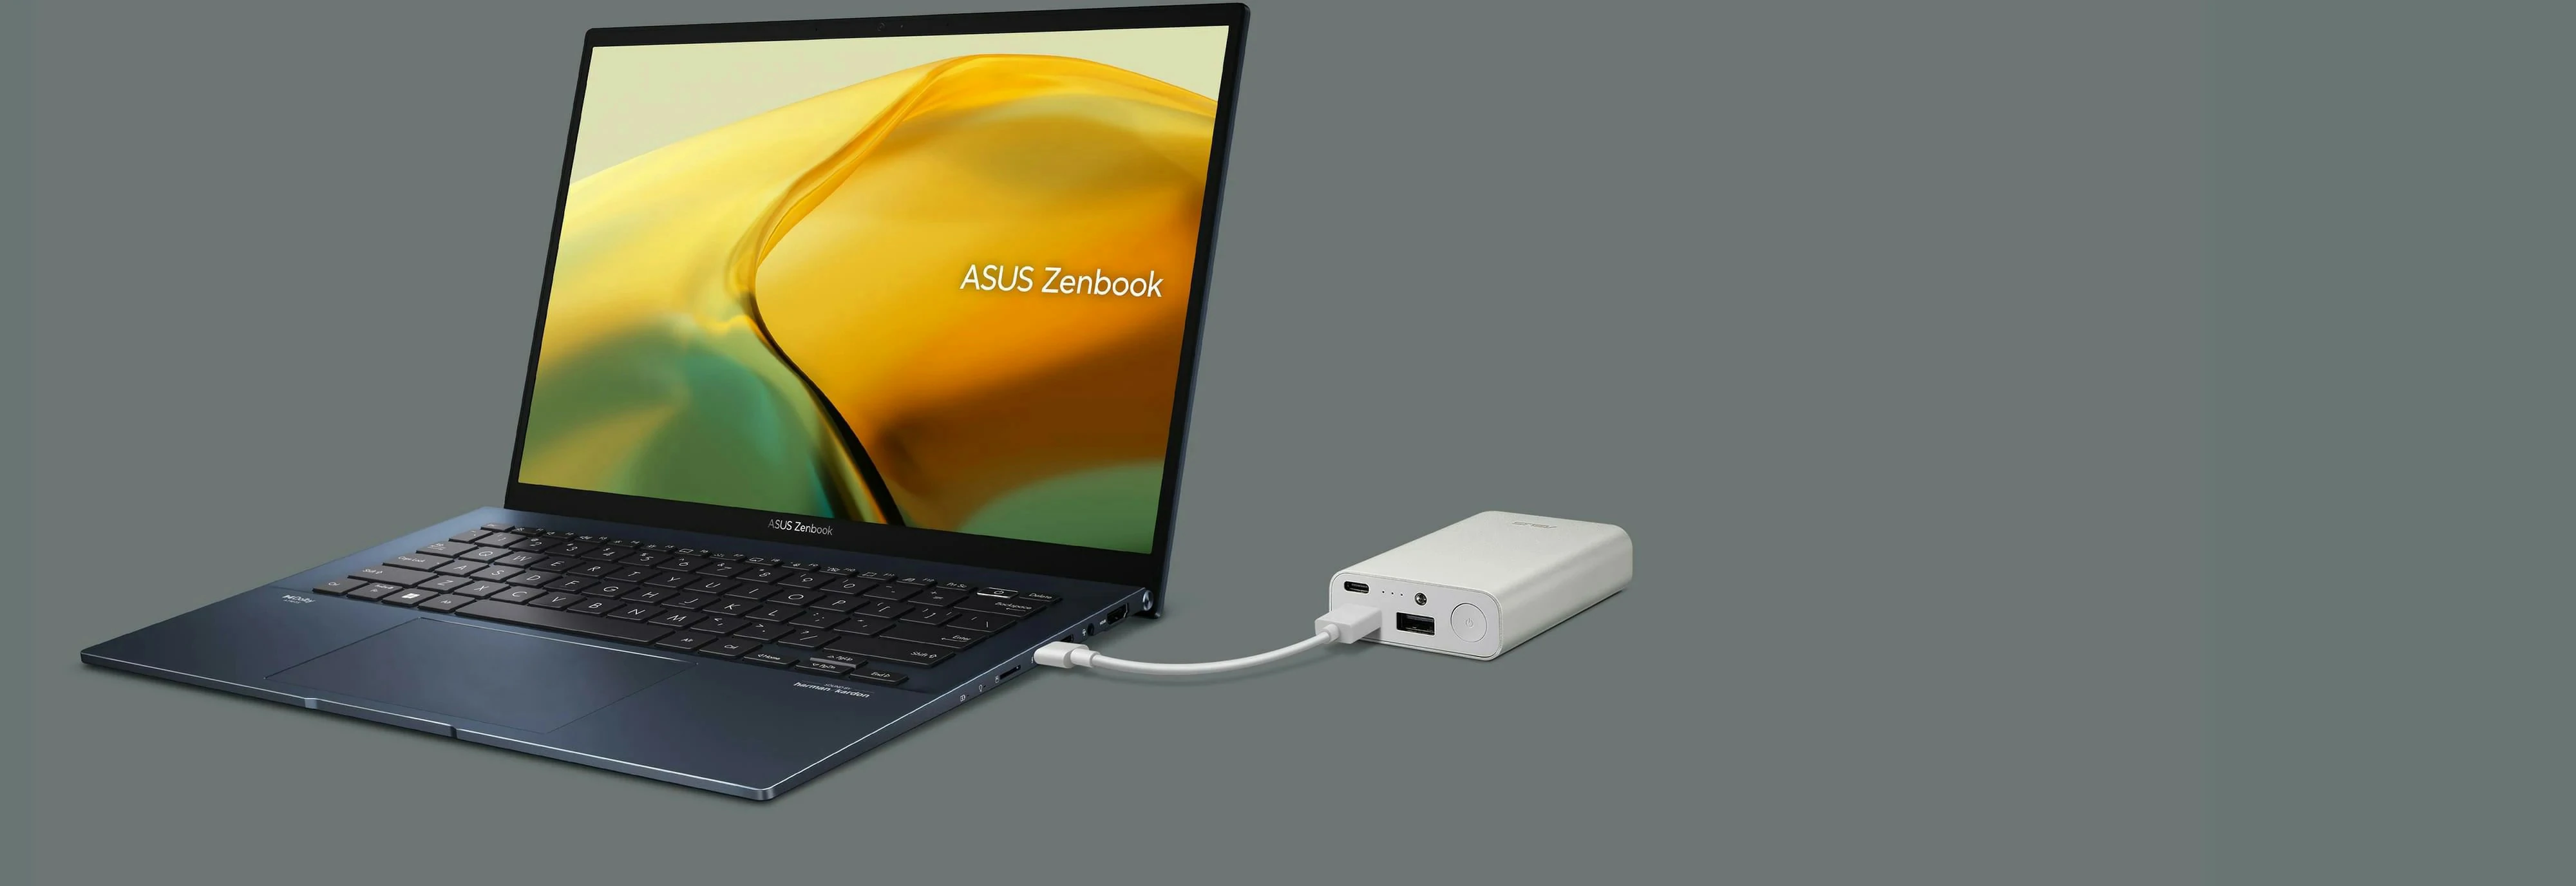 Zenbook 14 OLED in Ponder Blue charging via USB from a black power bank.